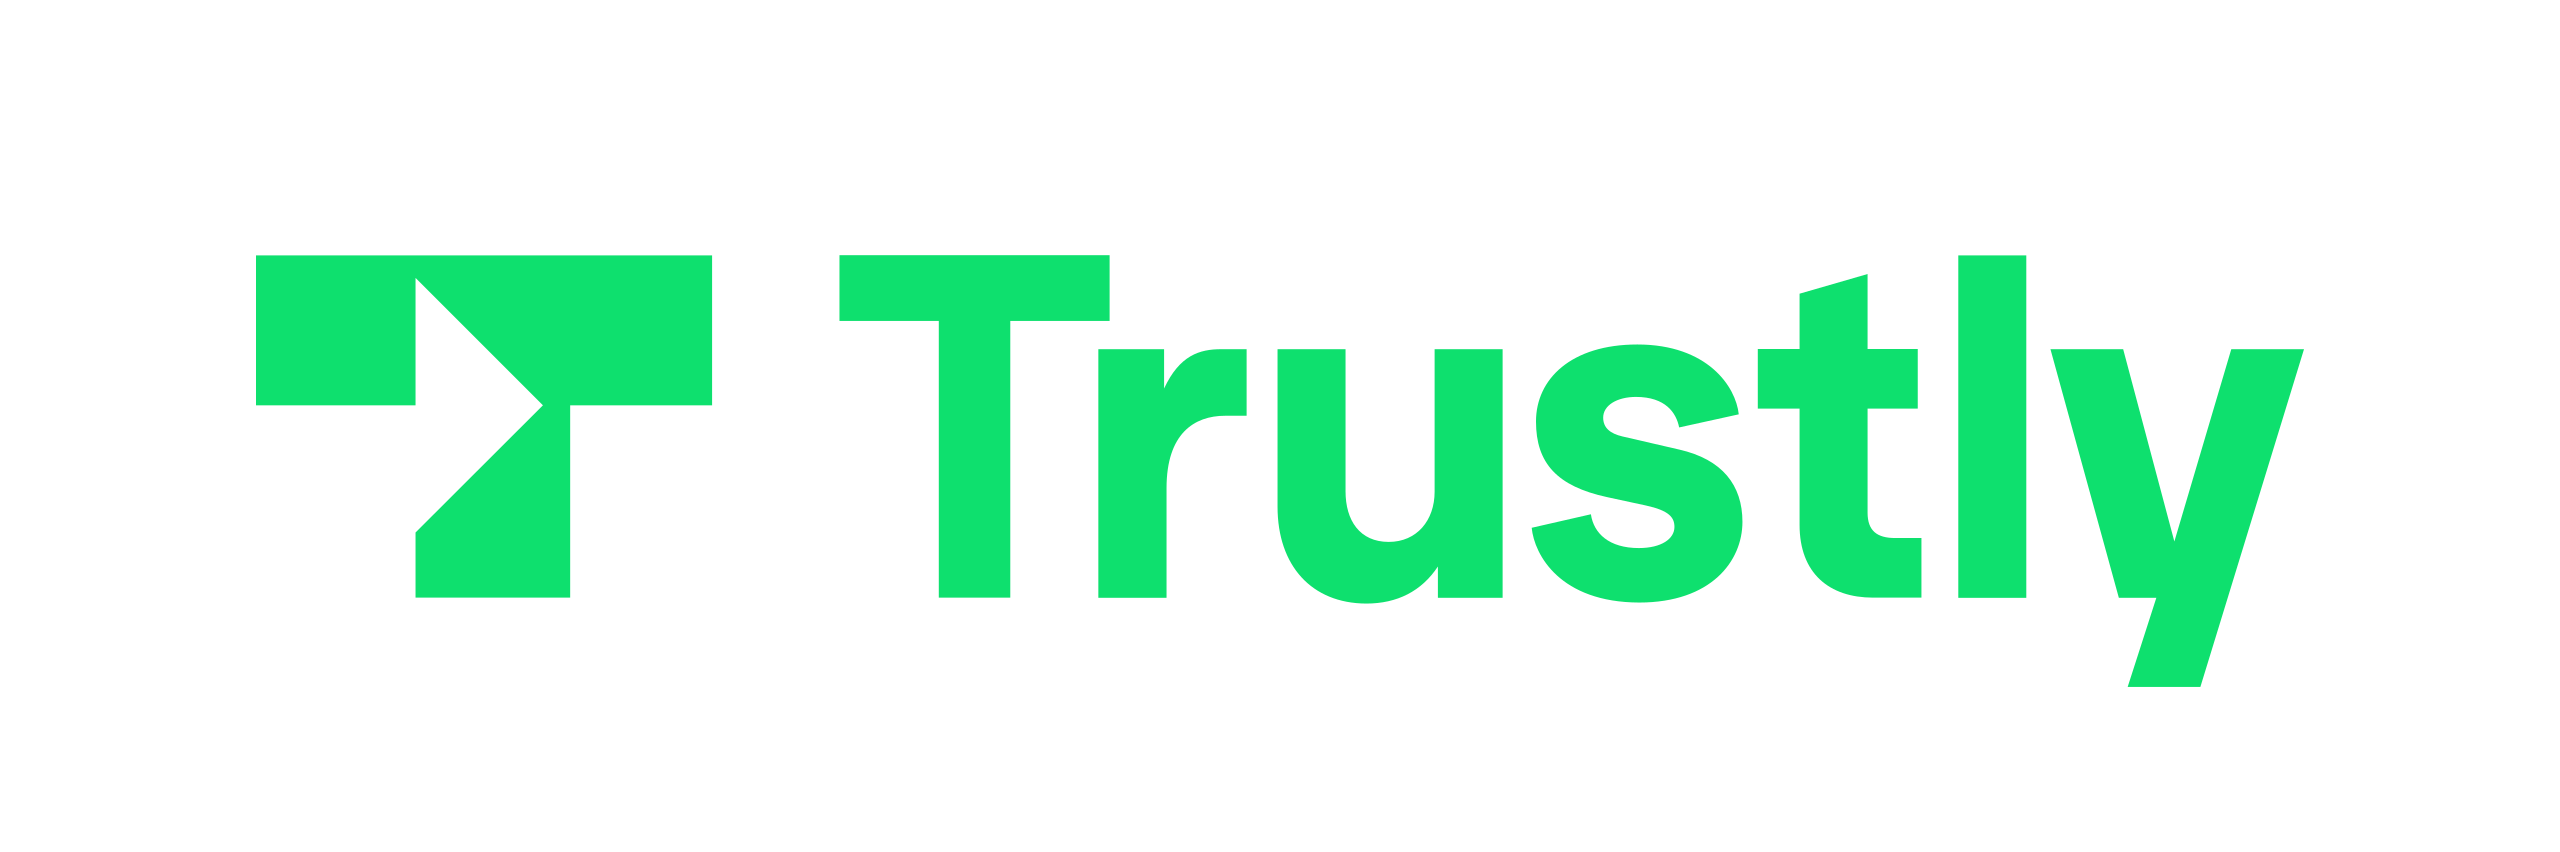 Trustly_Logotype.svg.png